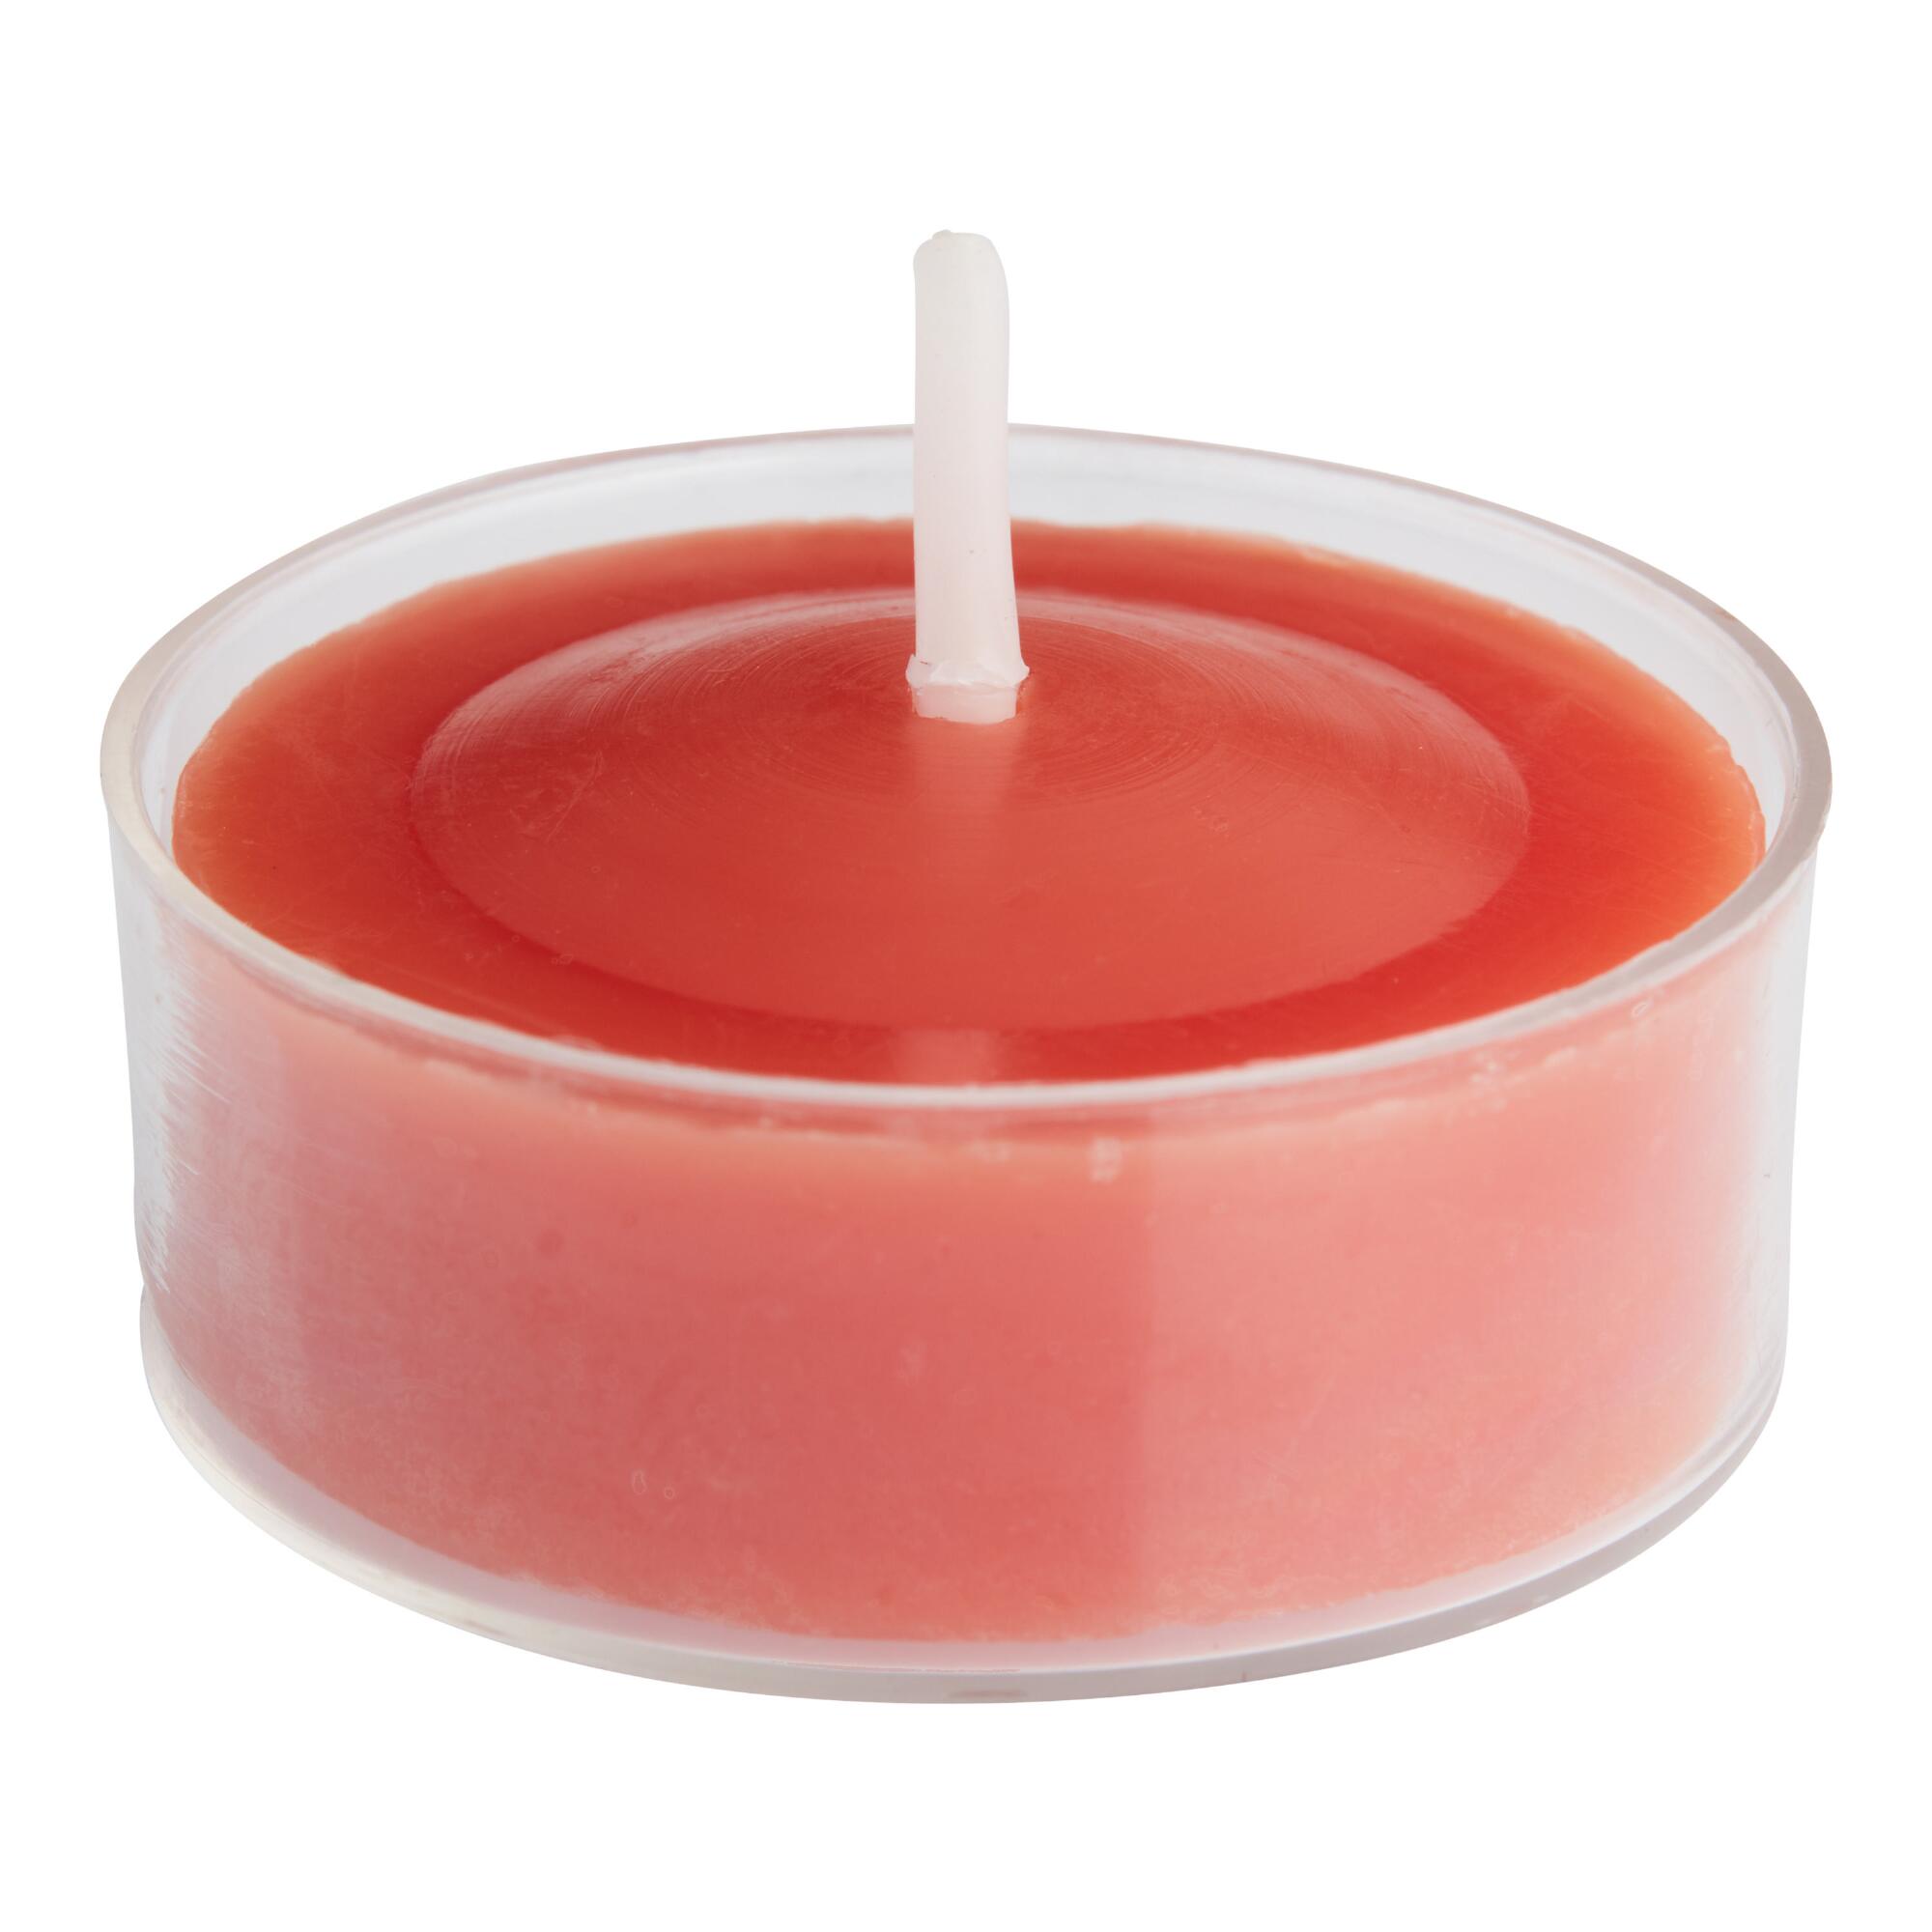 12 Pack Fireside Pumpkin Tealight Candles Set of 2: Orange - Scented Wax by World Market